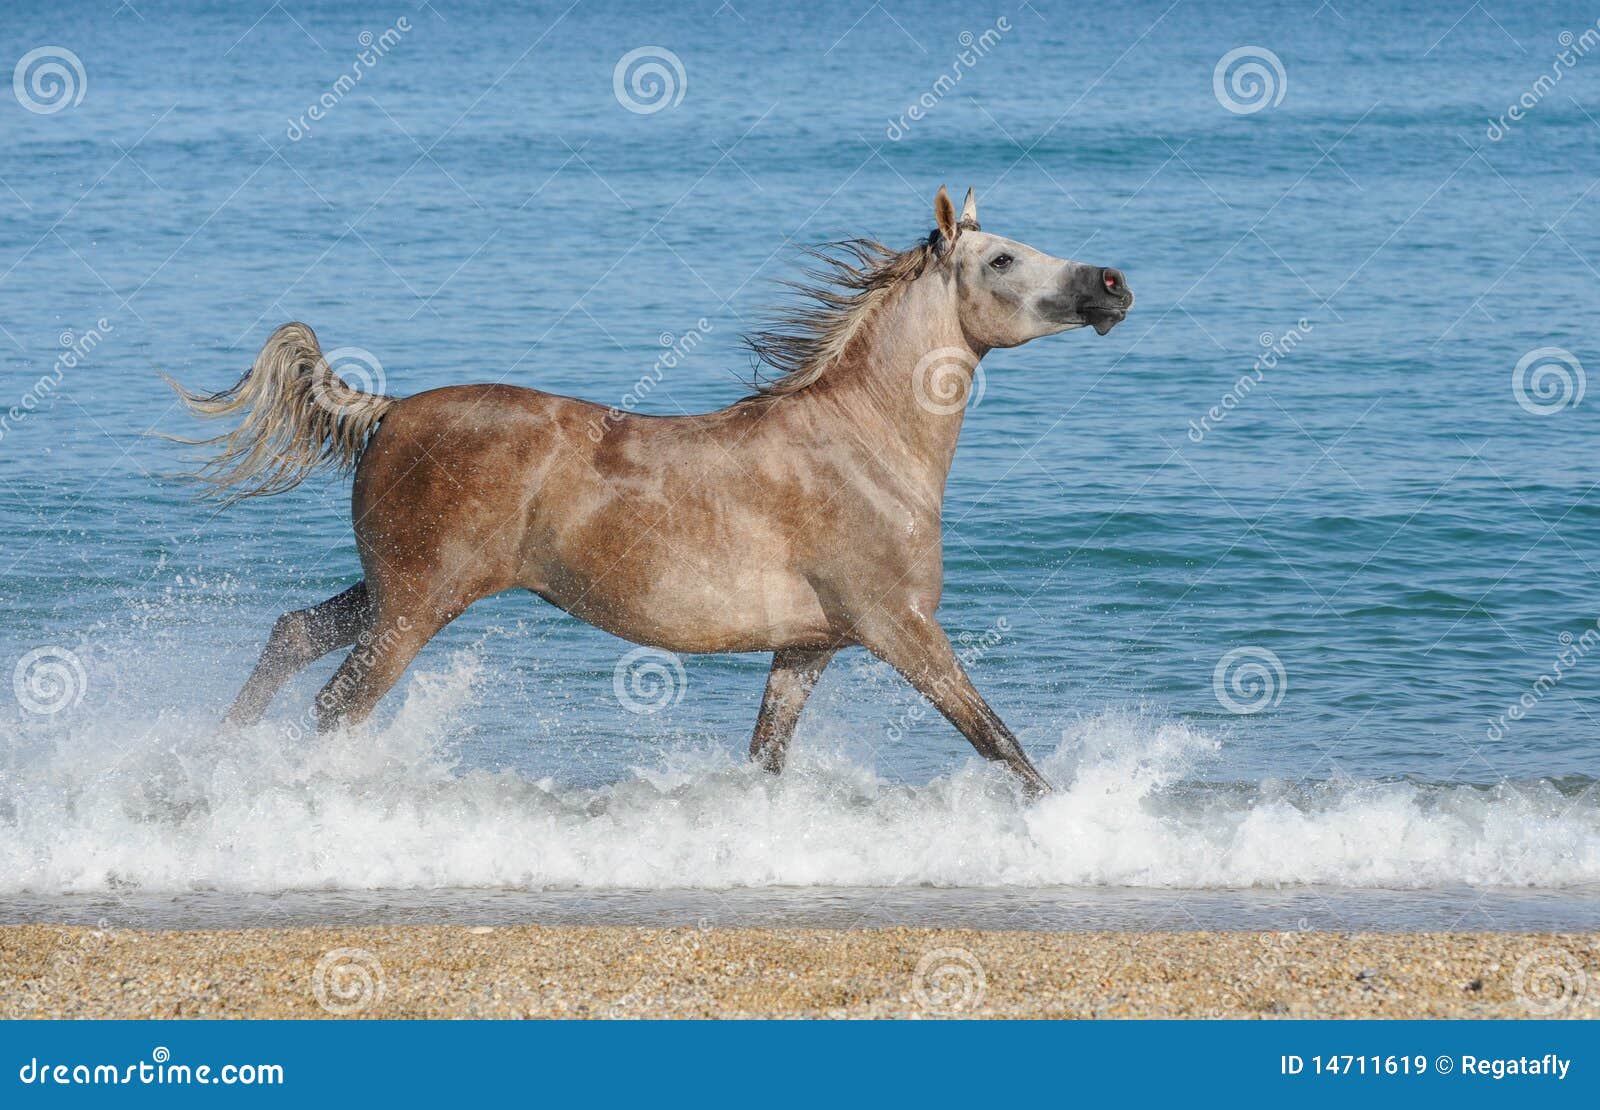 arabian horse running gallop